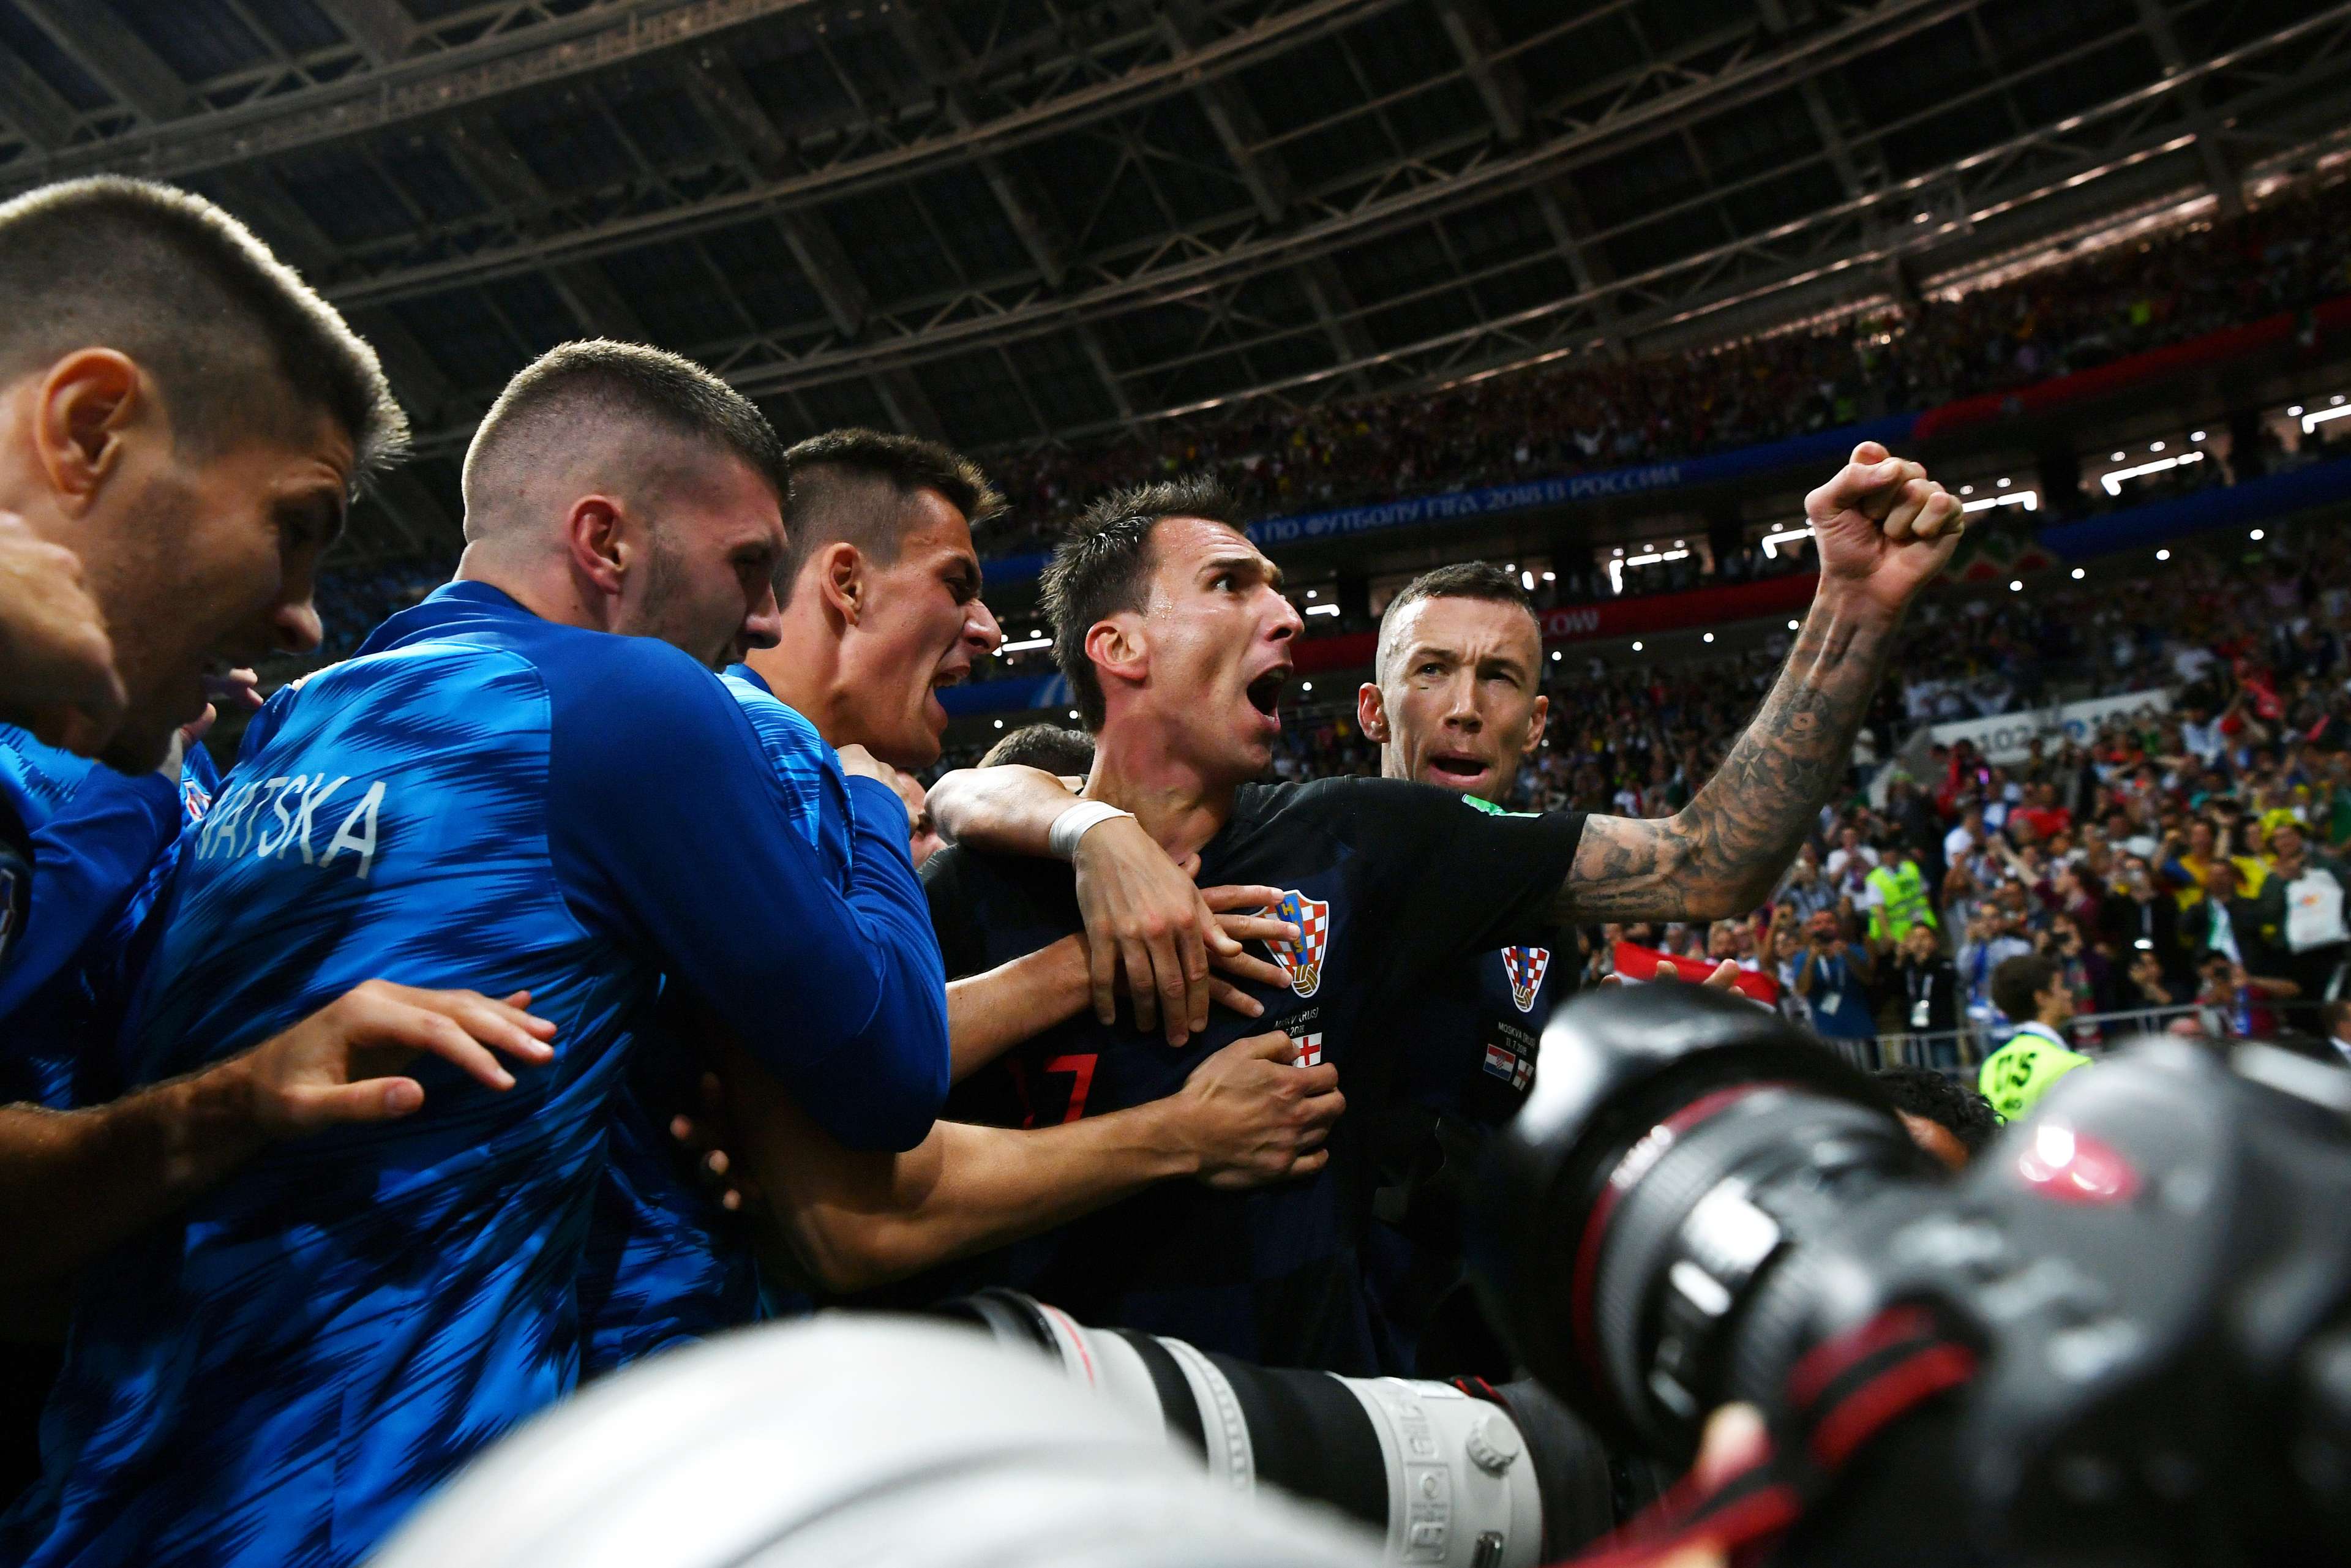 Croatia players celebrating vs England World Cup